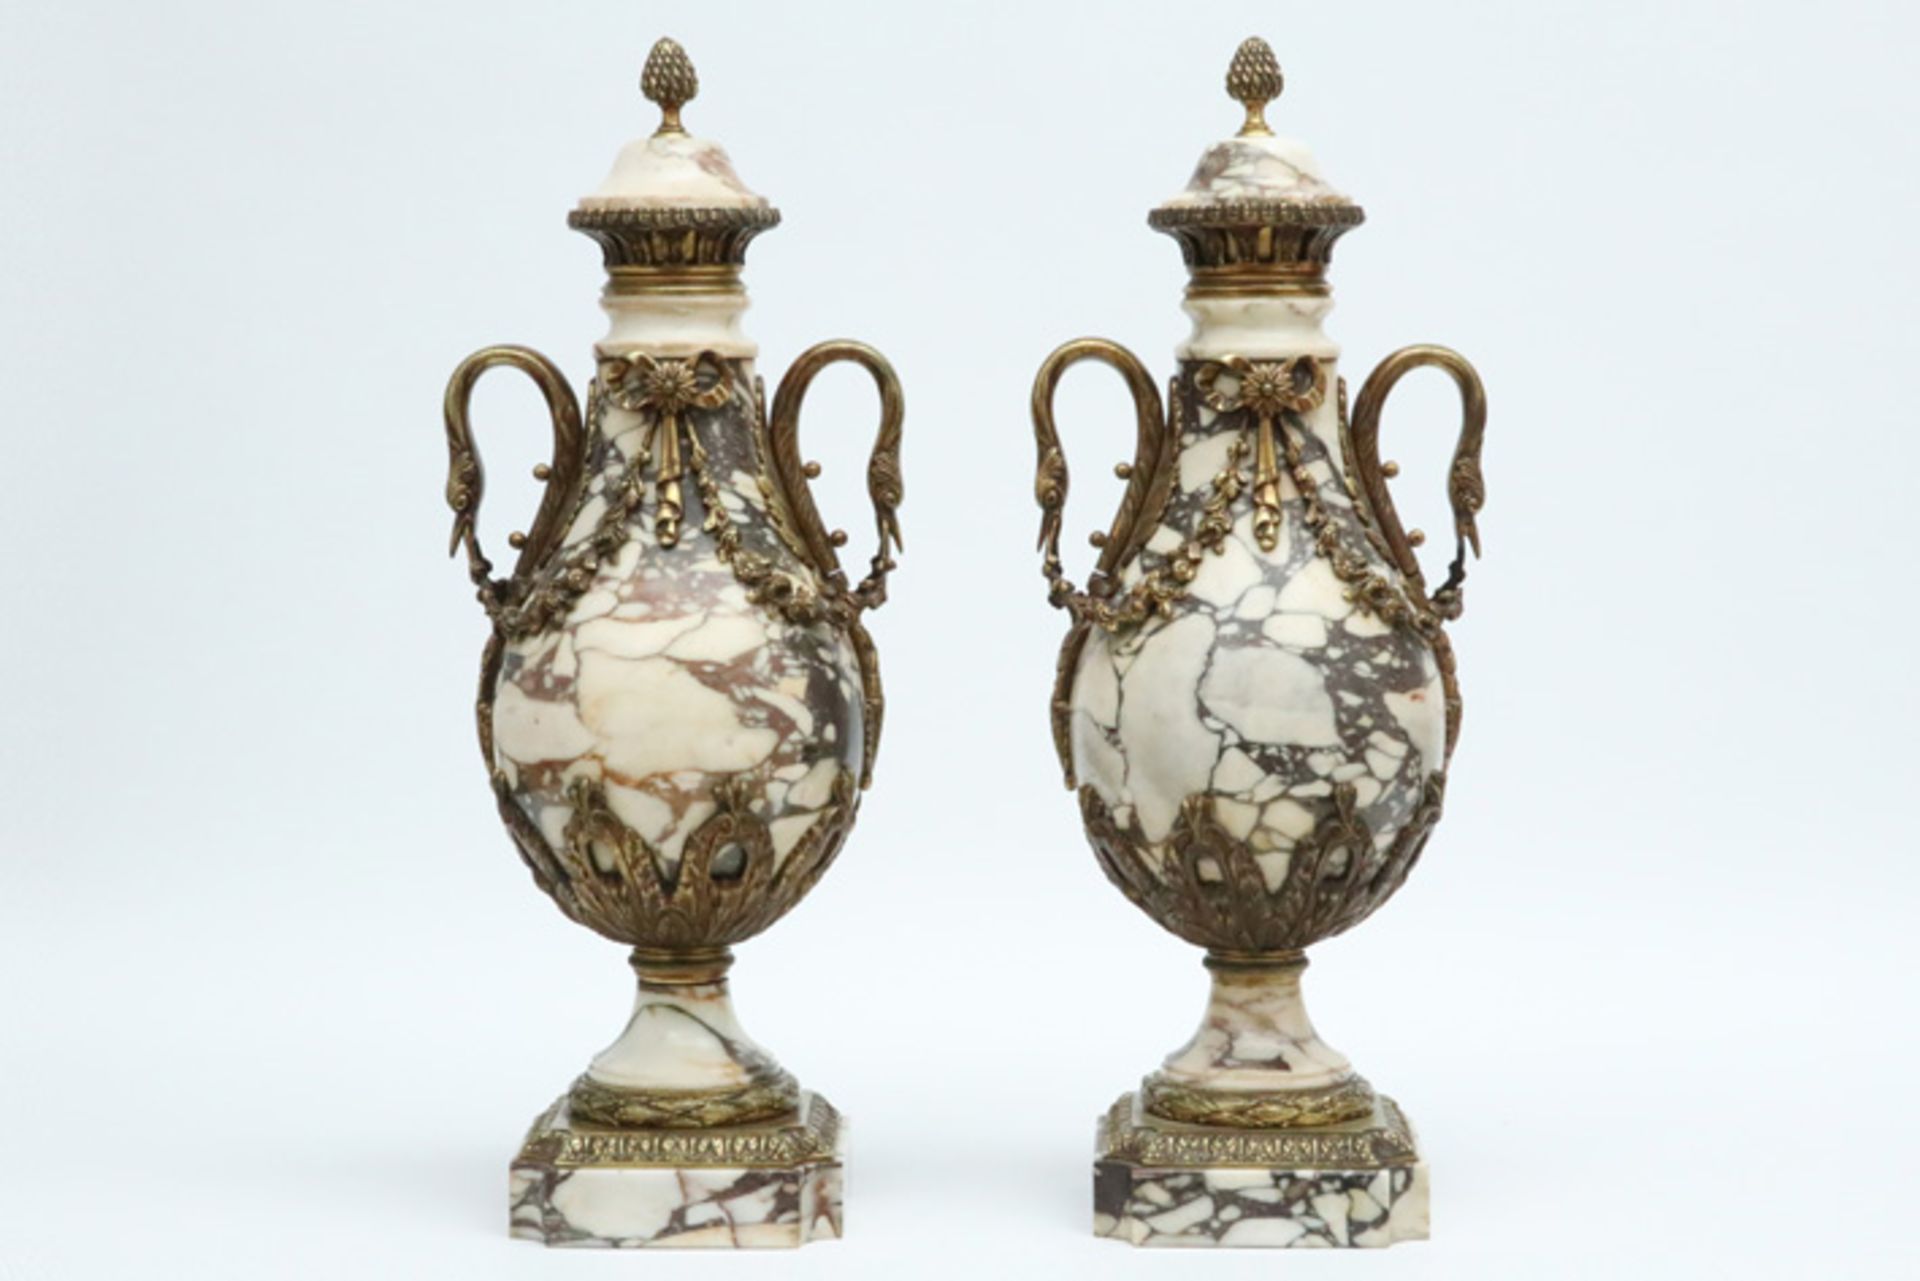 pair of antique neoclassical lidded vases in marble and gilded bronze || Paar antieke